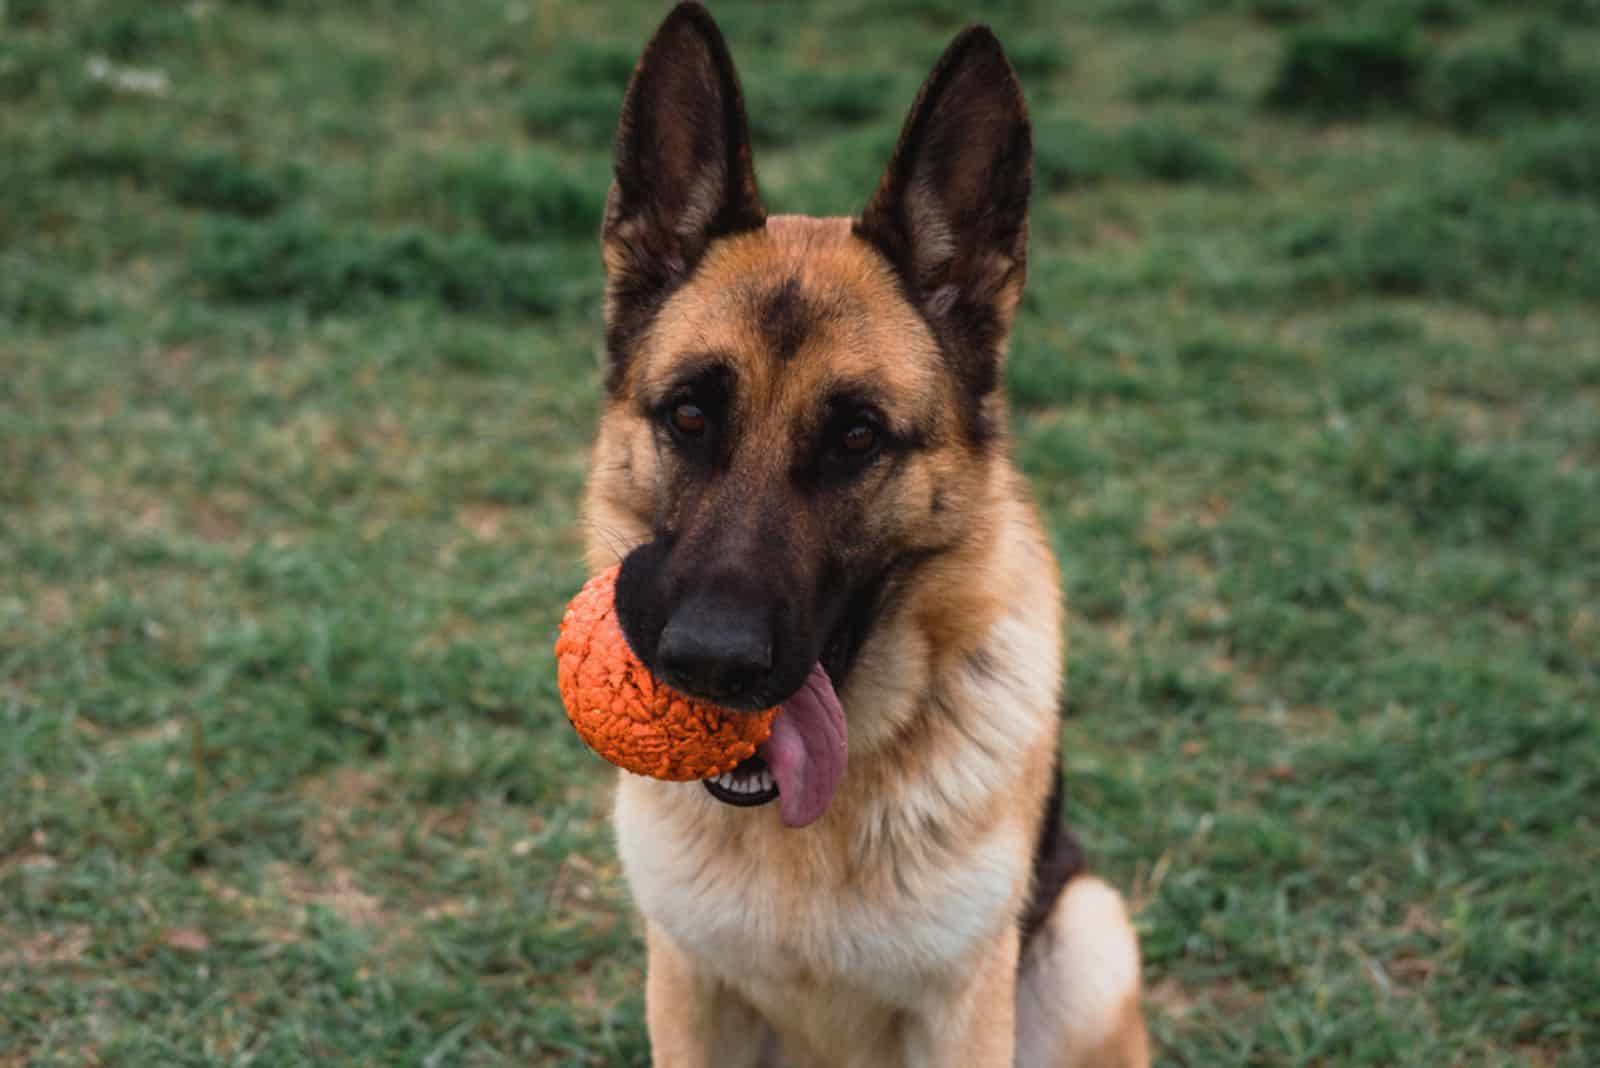 German shepherd with a ball.